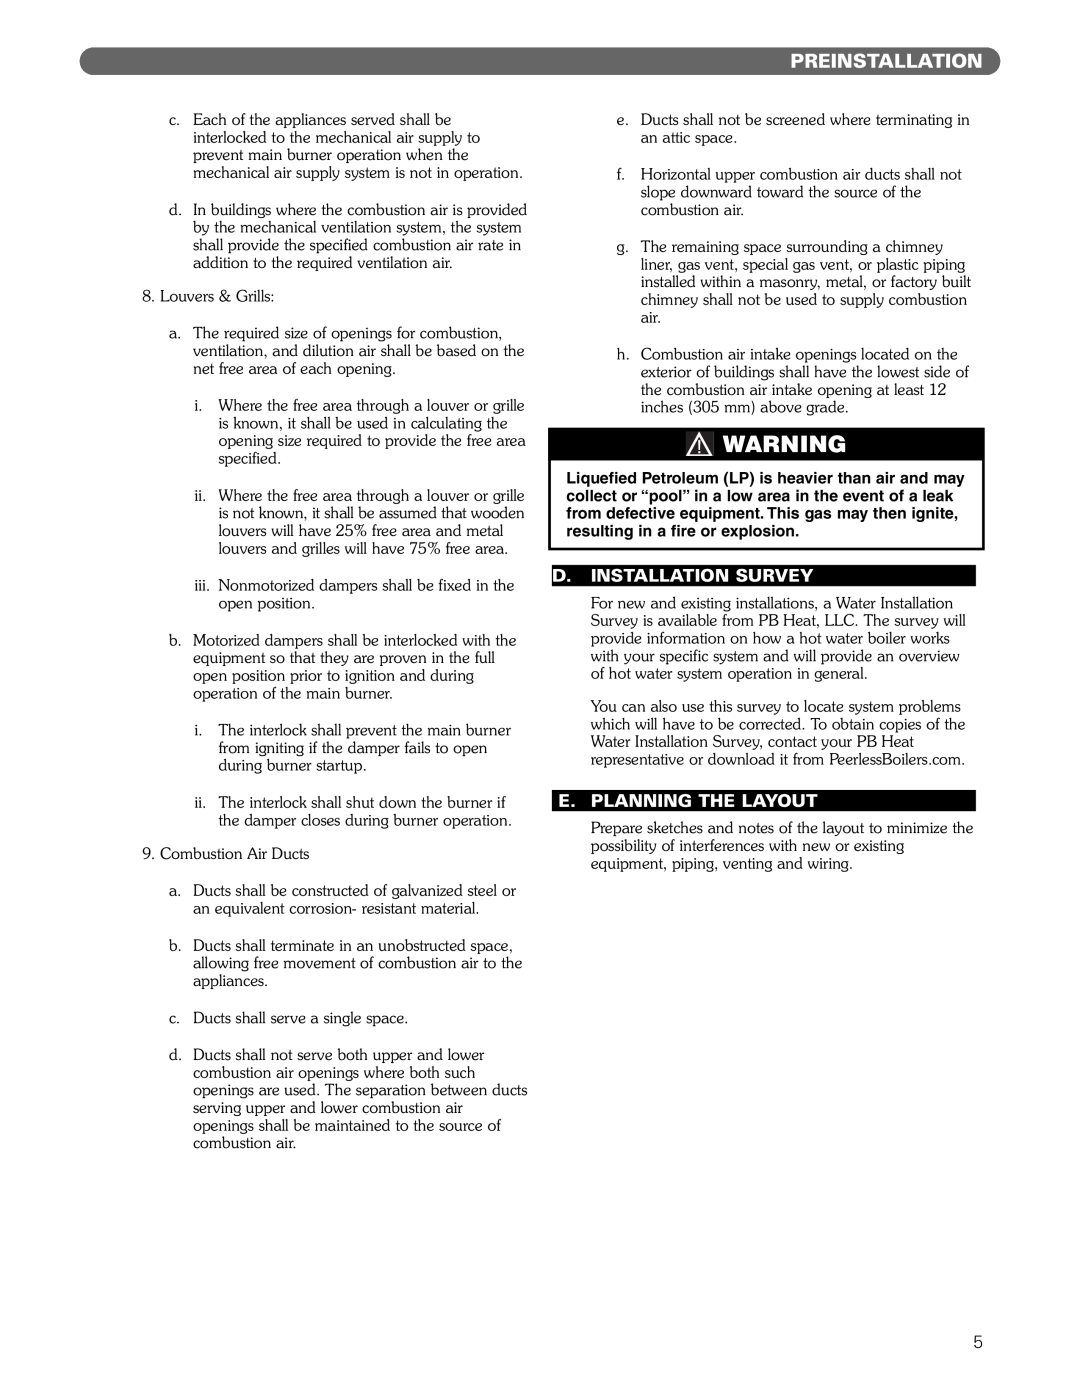 PB Heat MI/MIH series manual Preinstallation, D.Installation Survey, E.Planning The Layout 